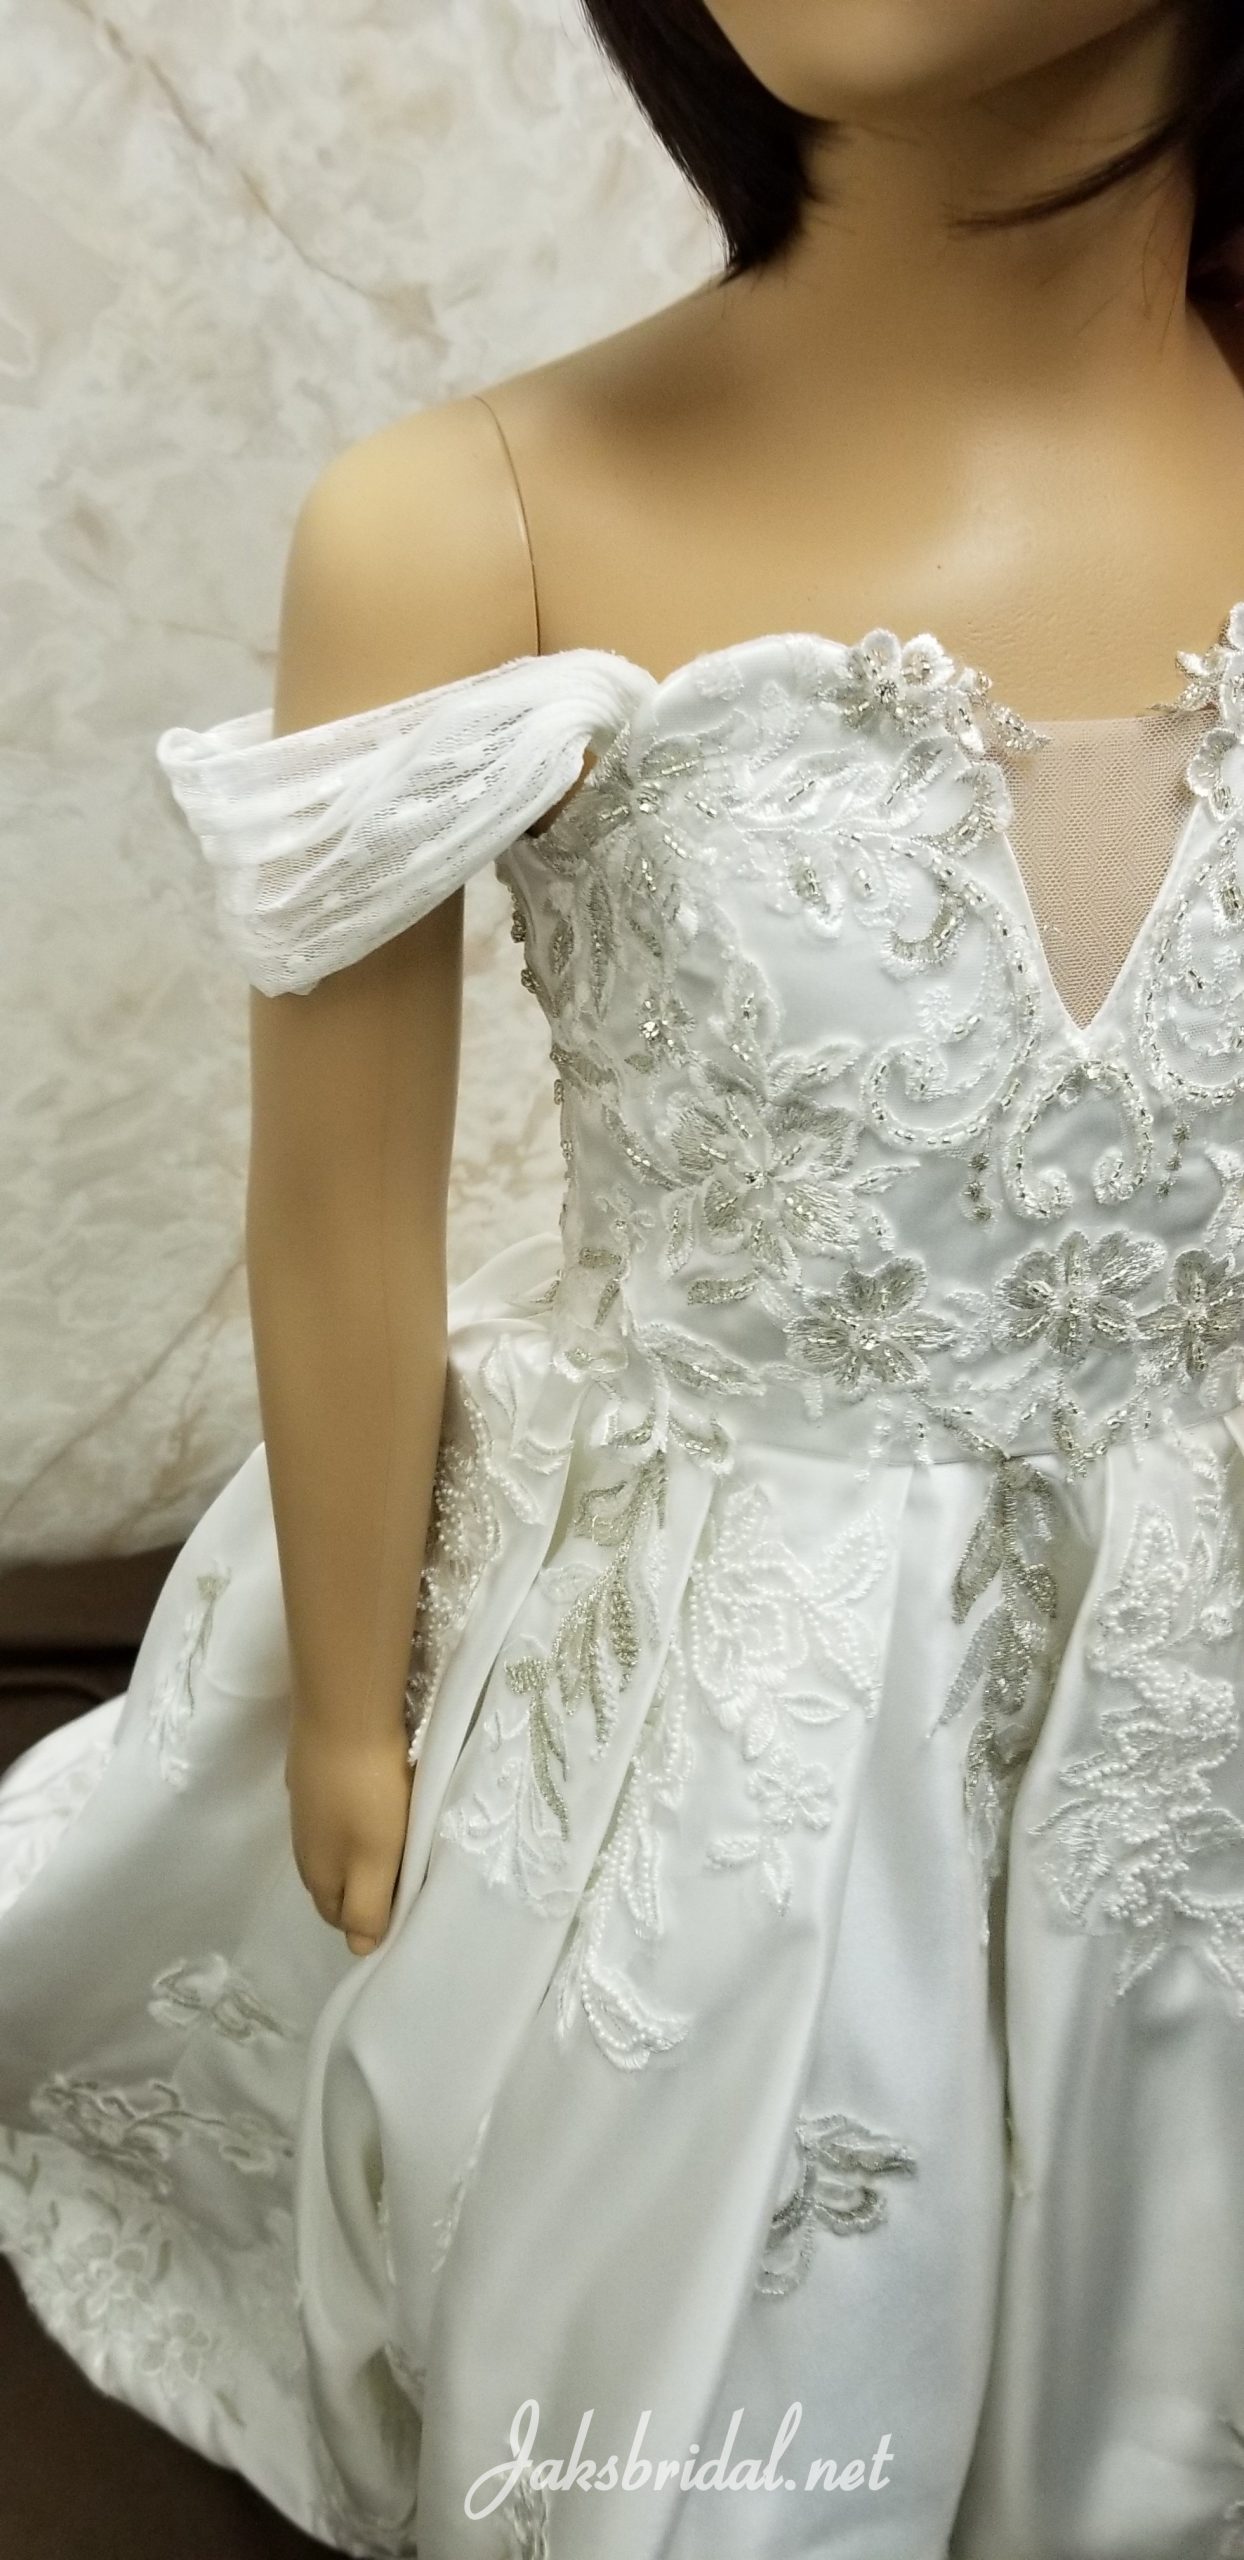 Black Wedding Dresses: 33 Unusual Styles + FAQs | Beautiful prom dresses,  Prom dresses ball gown, Ball gowns prom